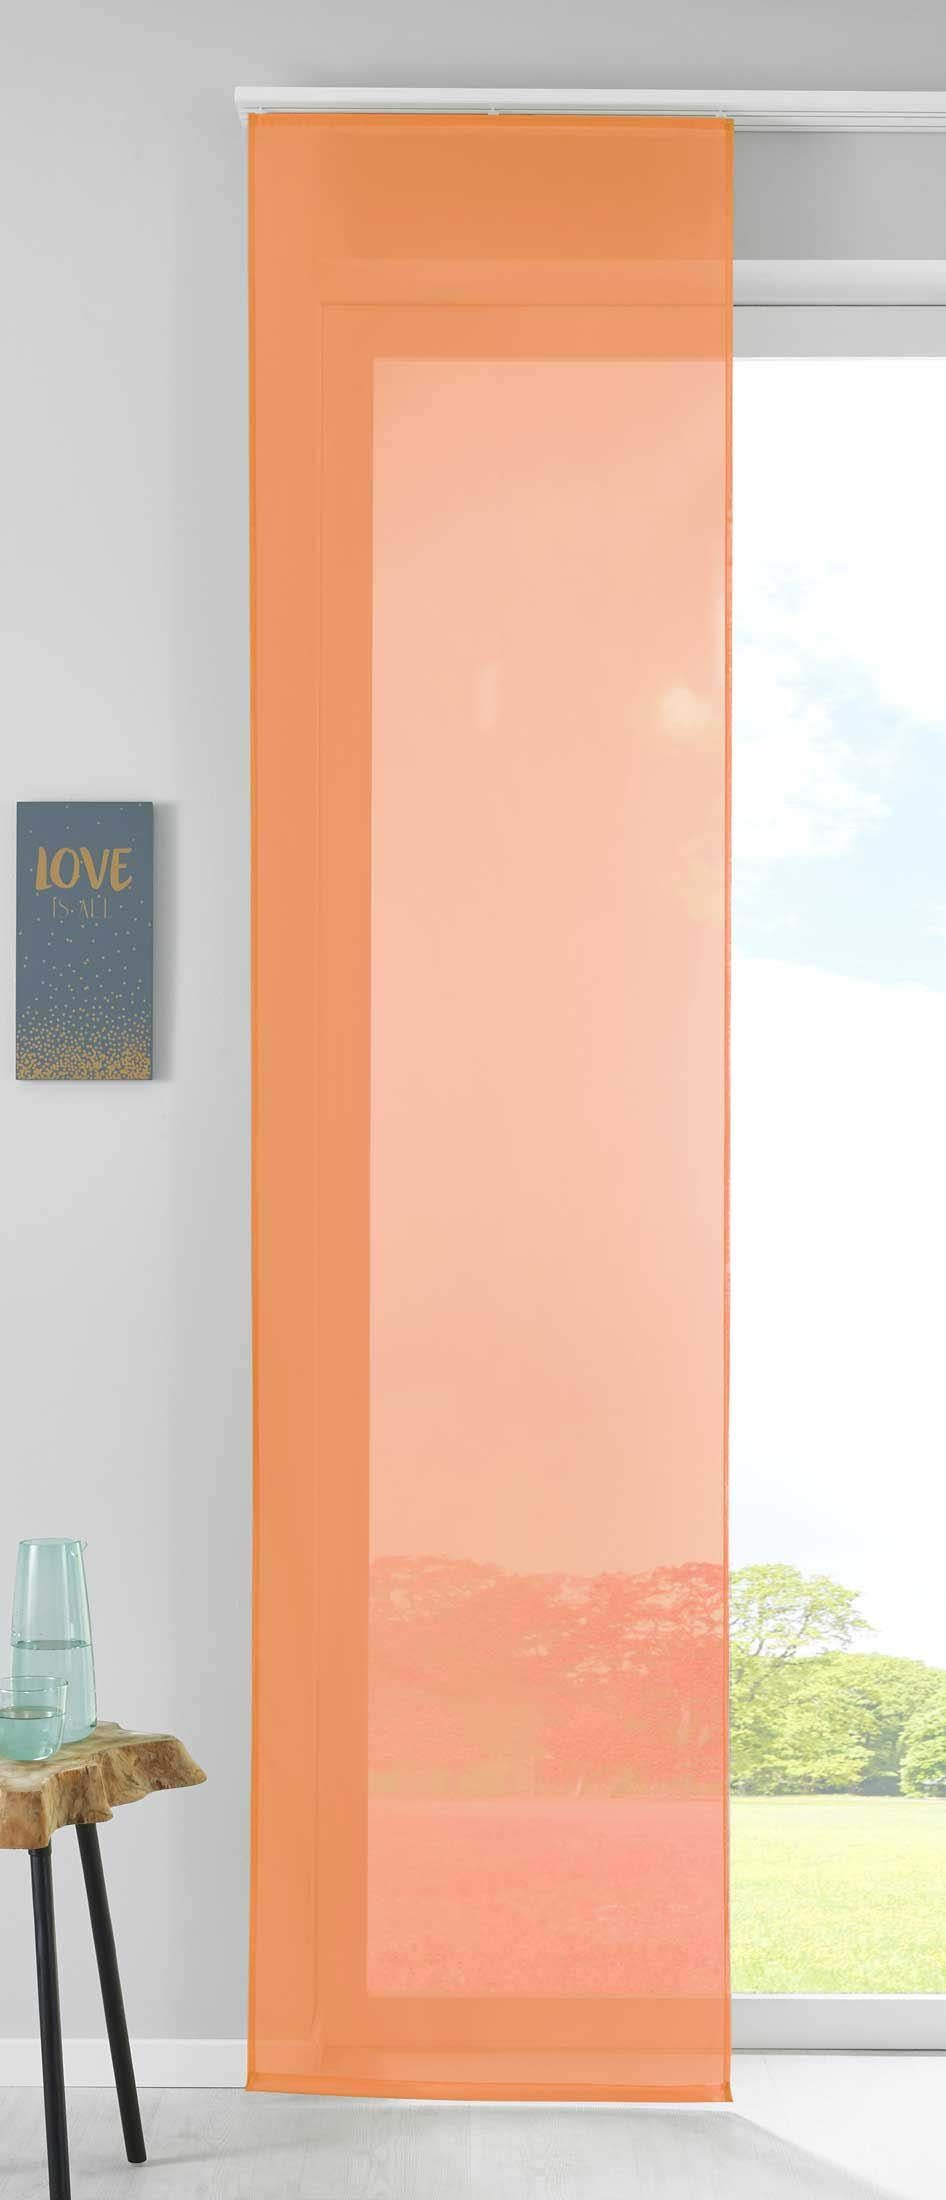 Schiebegardine, Gardinenbox, Paneelwagen (1 St), transparent, Flächenvorhang Voile inkl. Paneelwagen Beschwerungsstange 85589N Orange